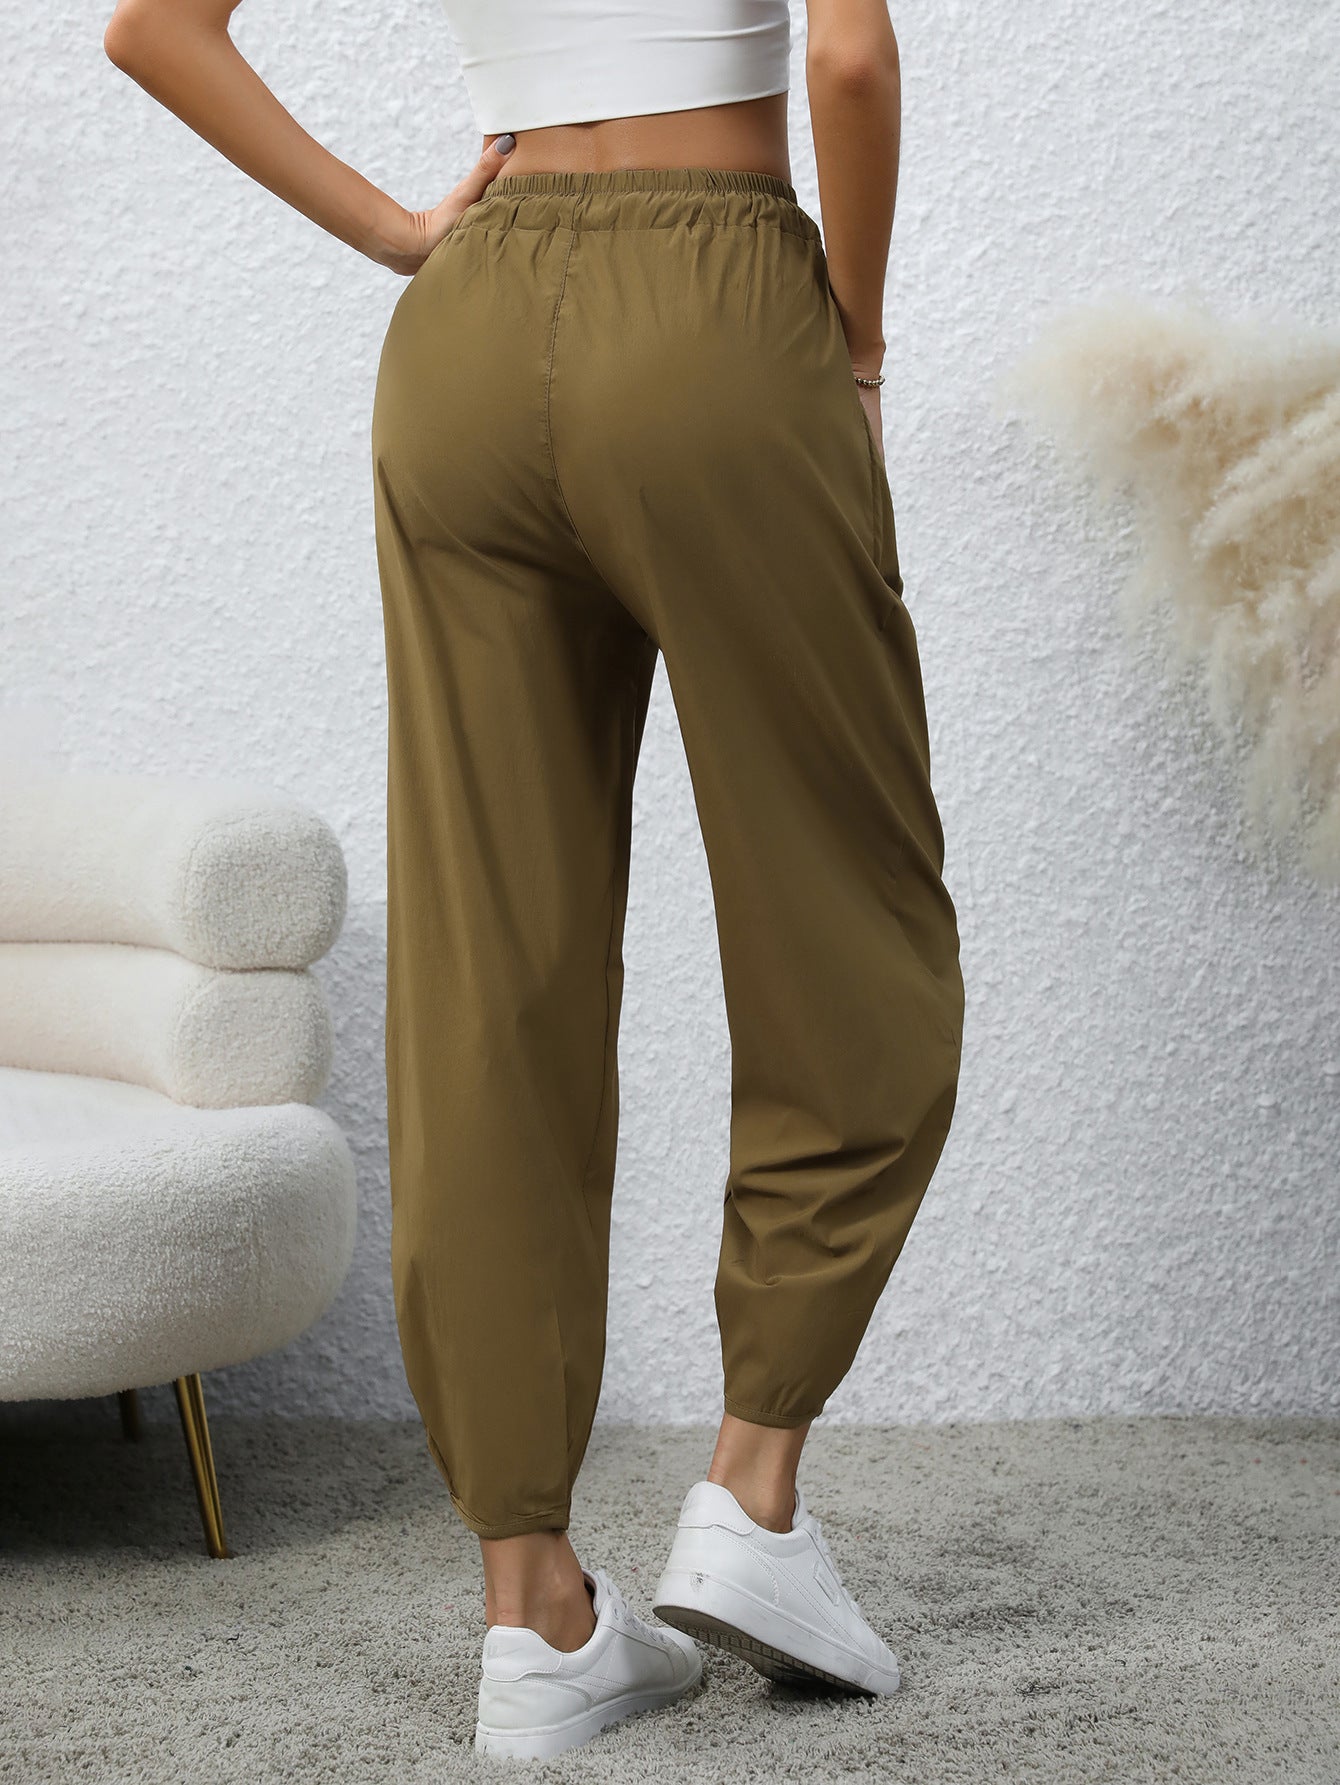 Women's Drawstring Pocket Fashion Loose Casual Pants